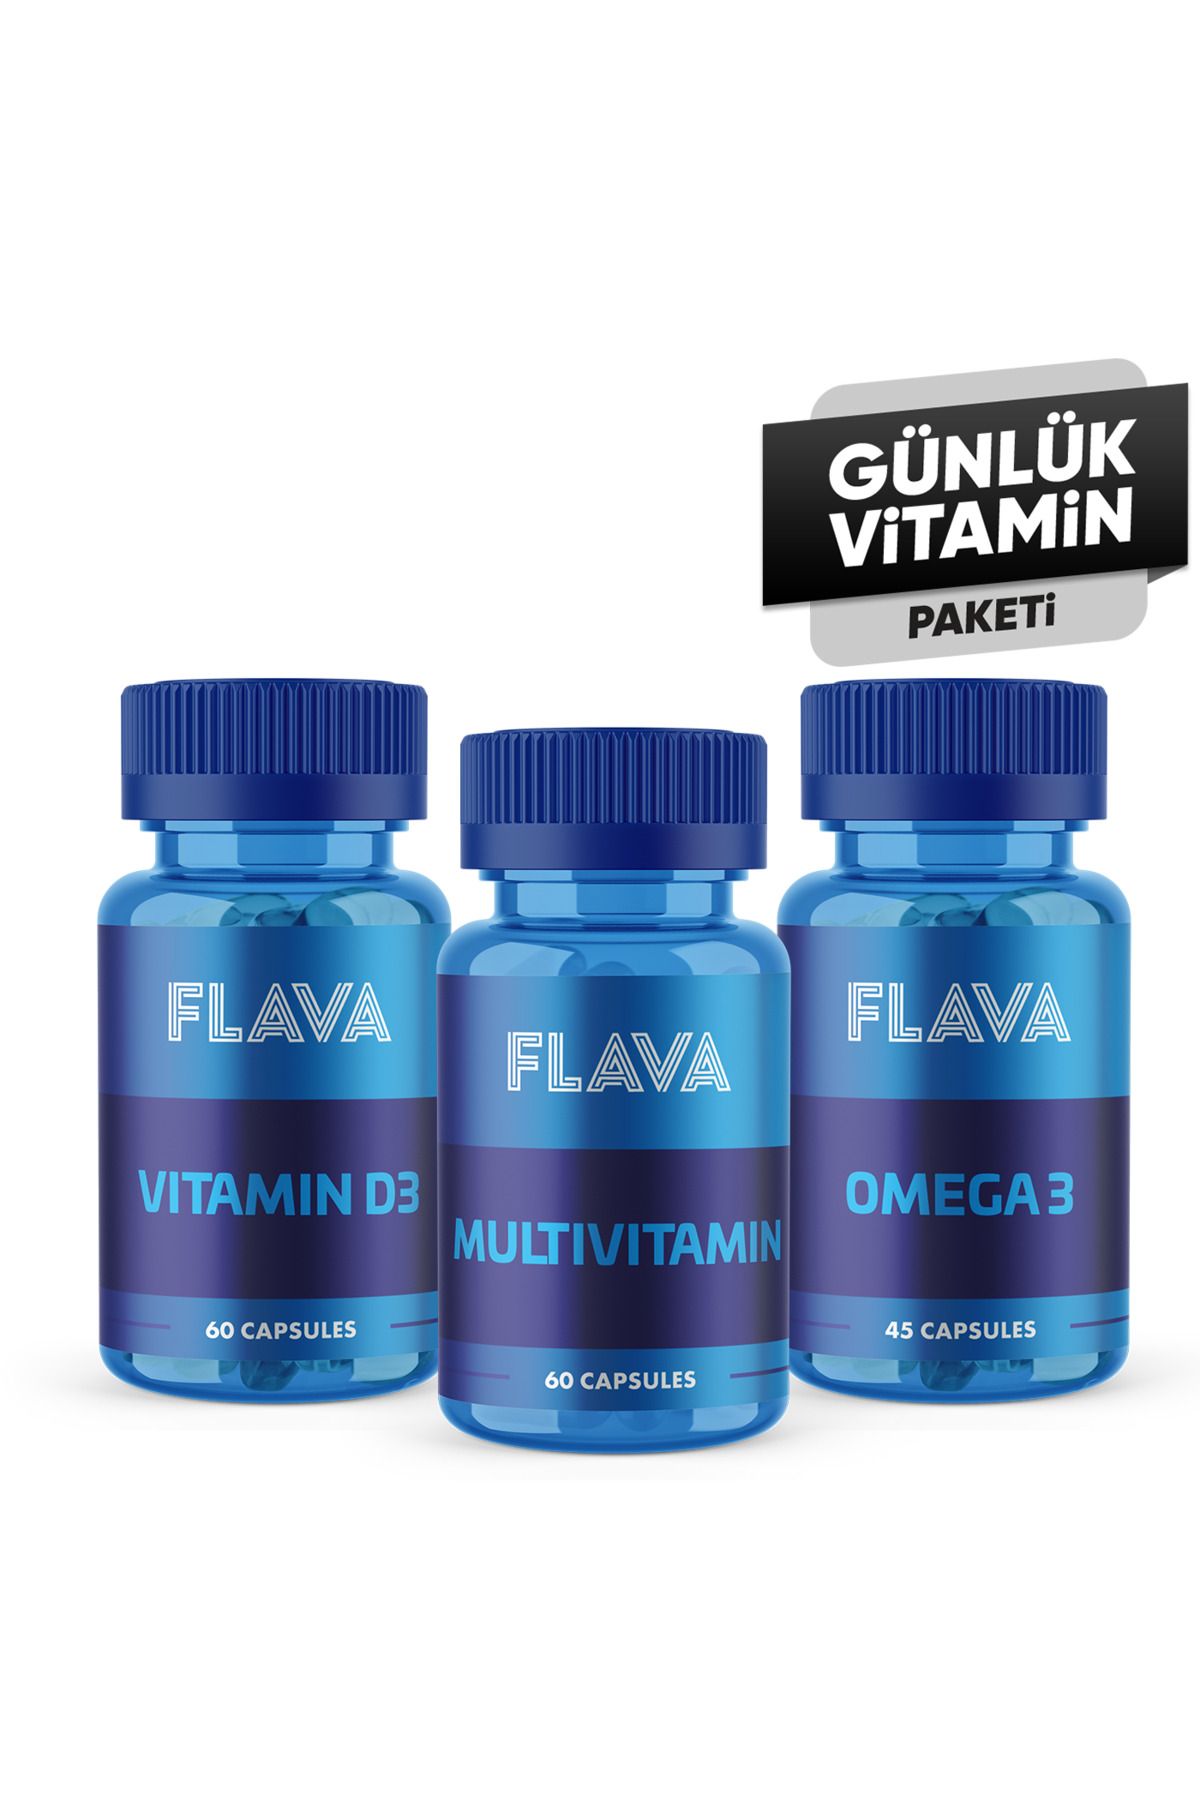 FLAVA Günlük Vitamin Paketi